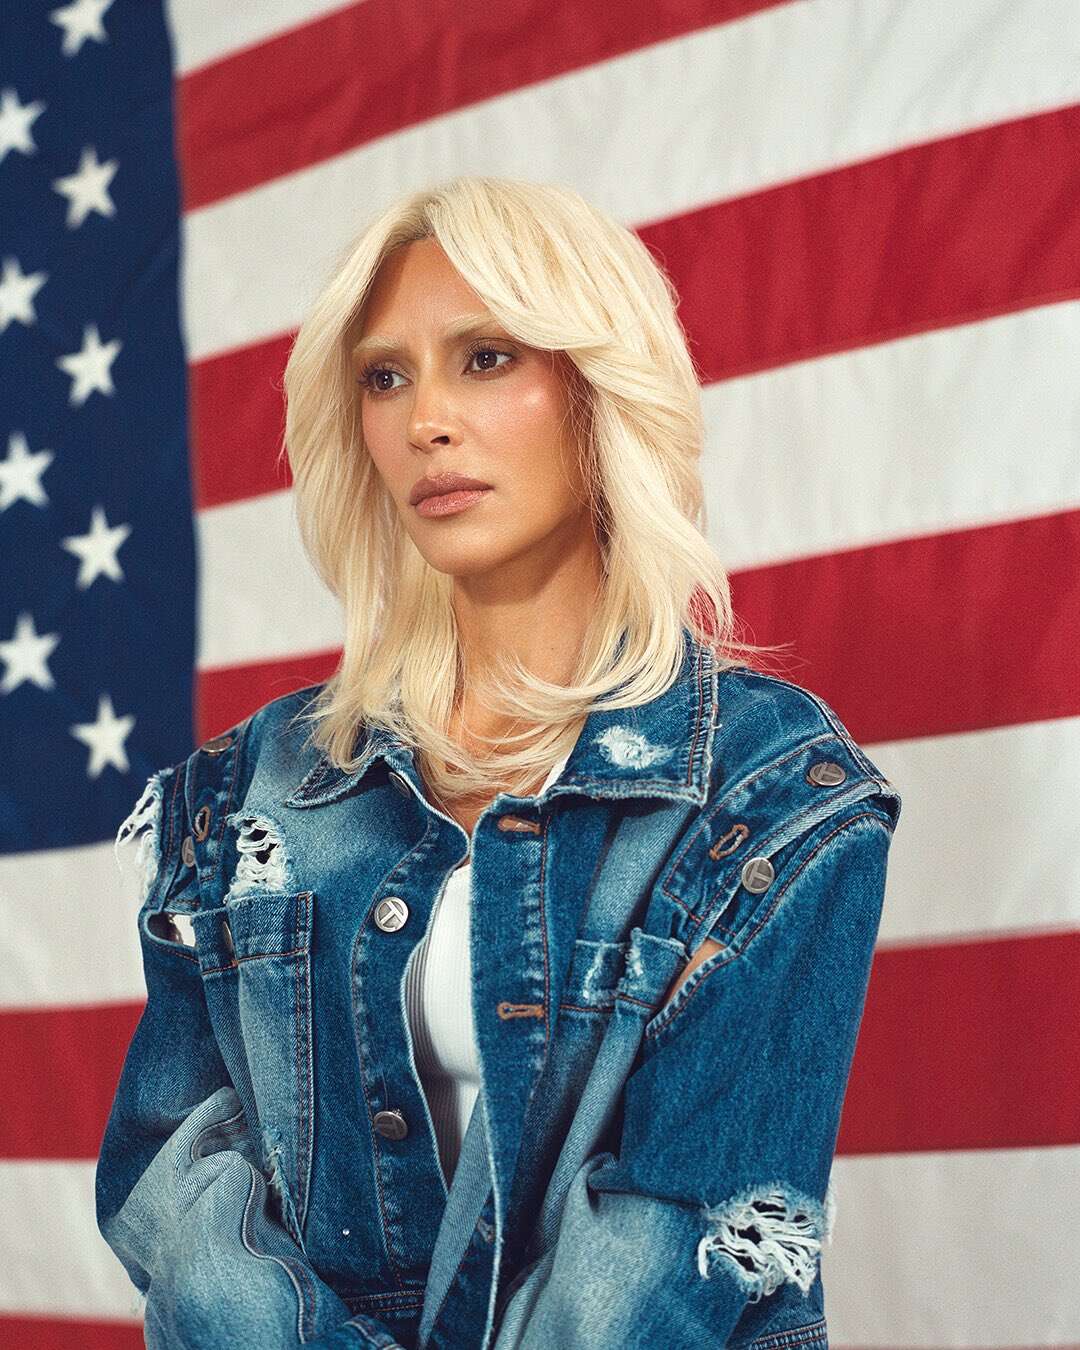 Kim Kardashian devant le drapeau américain.